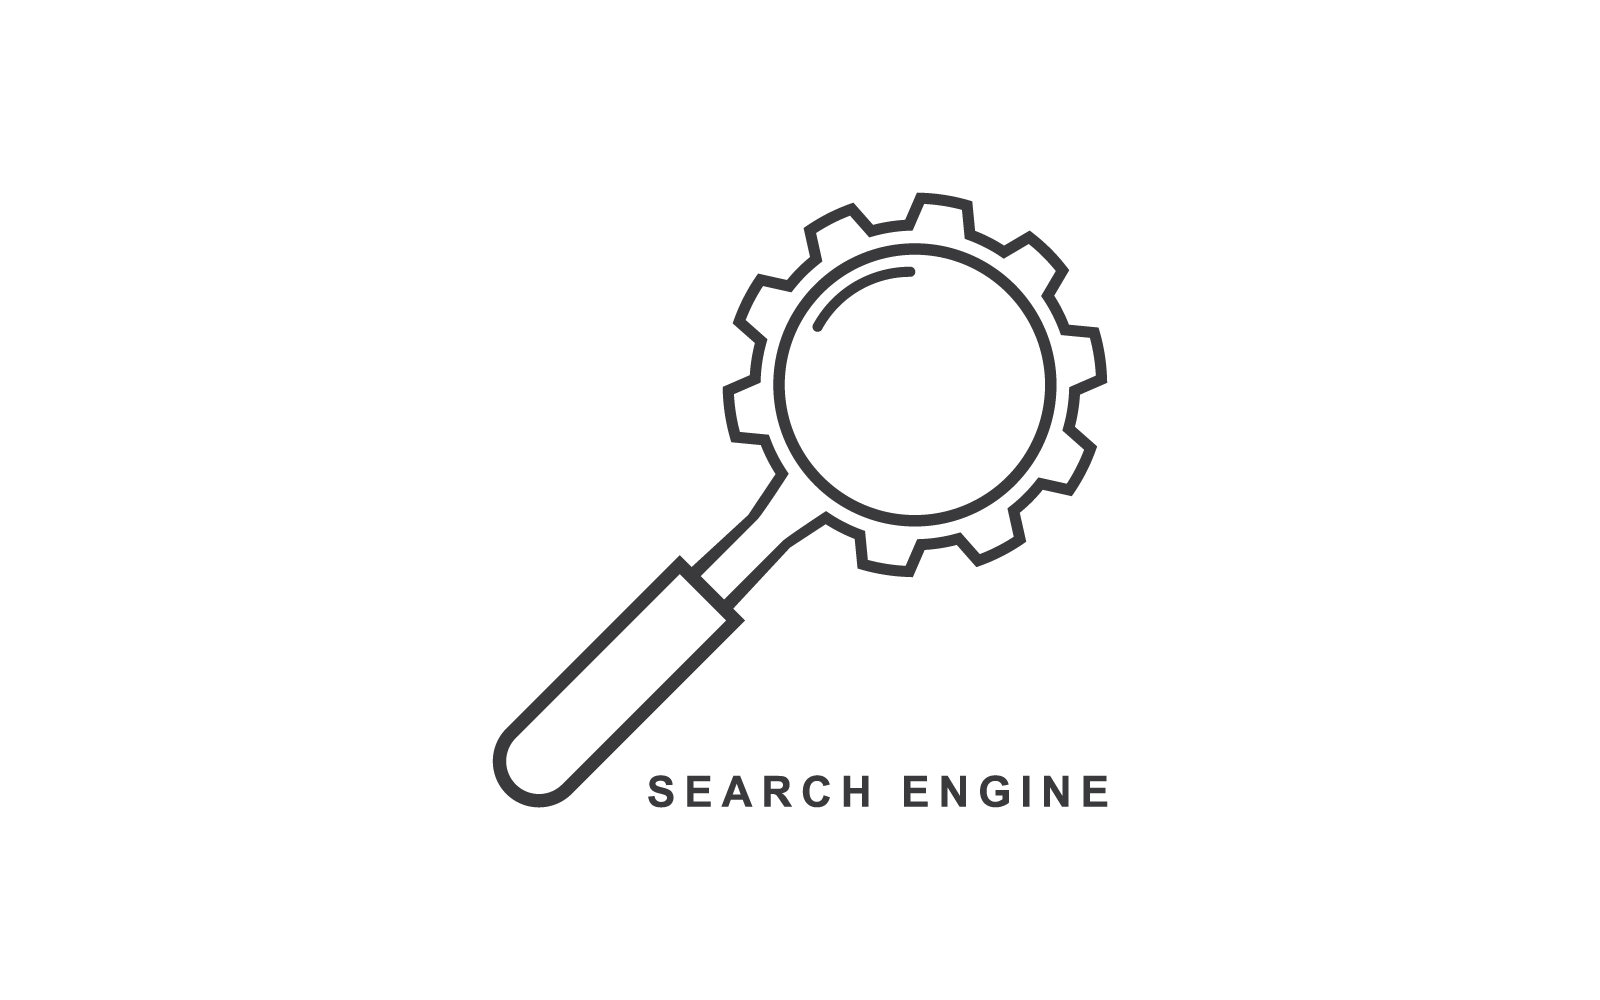 Search engine illustration logo vector flat design